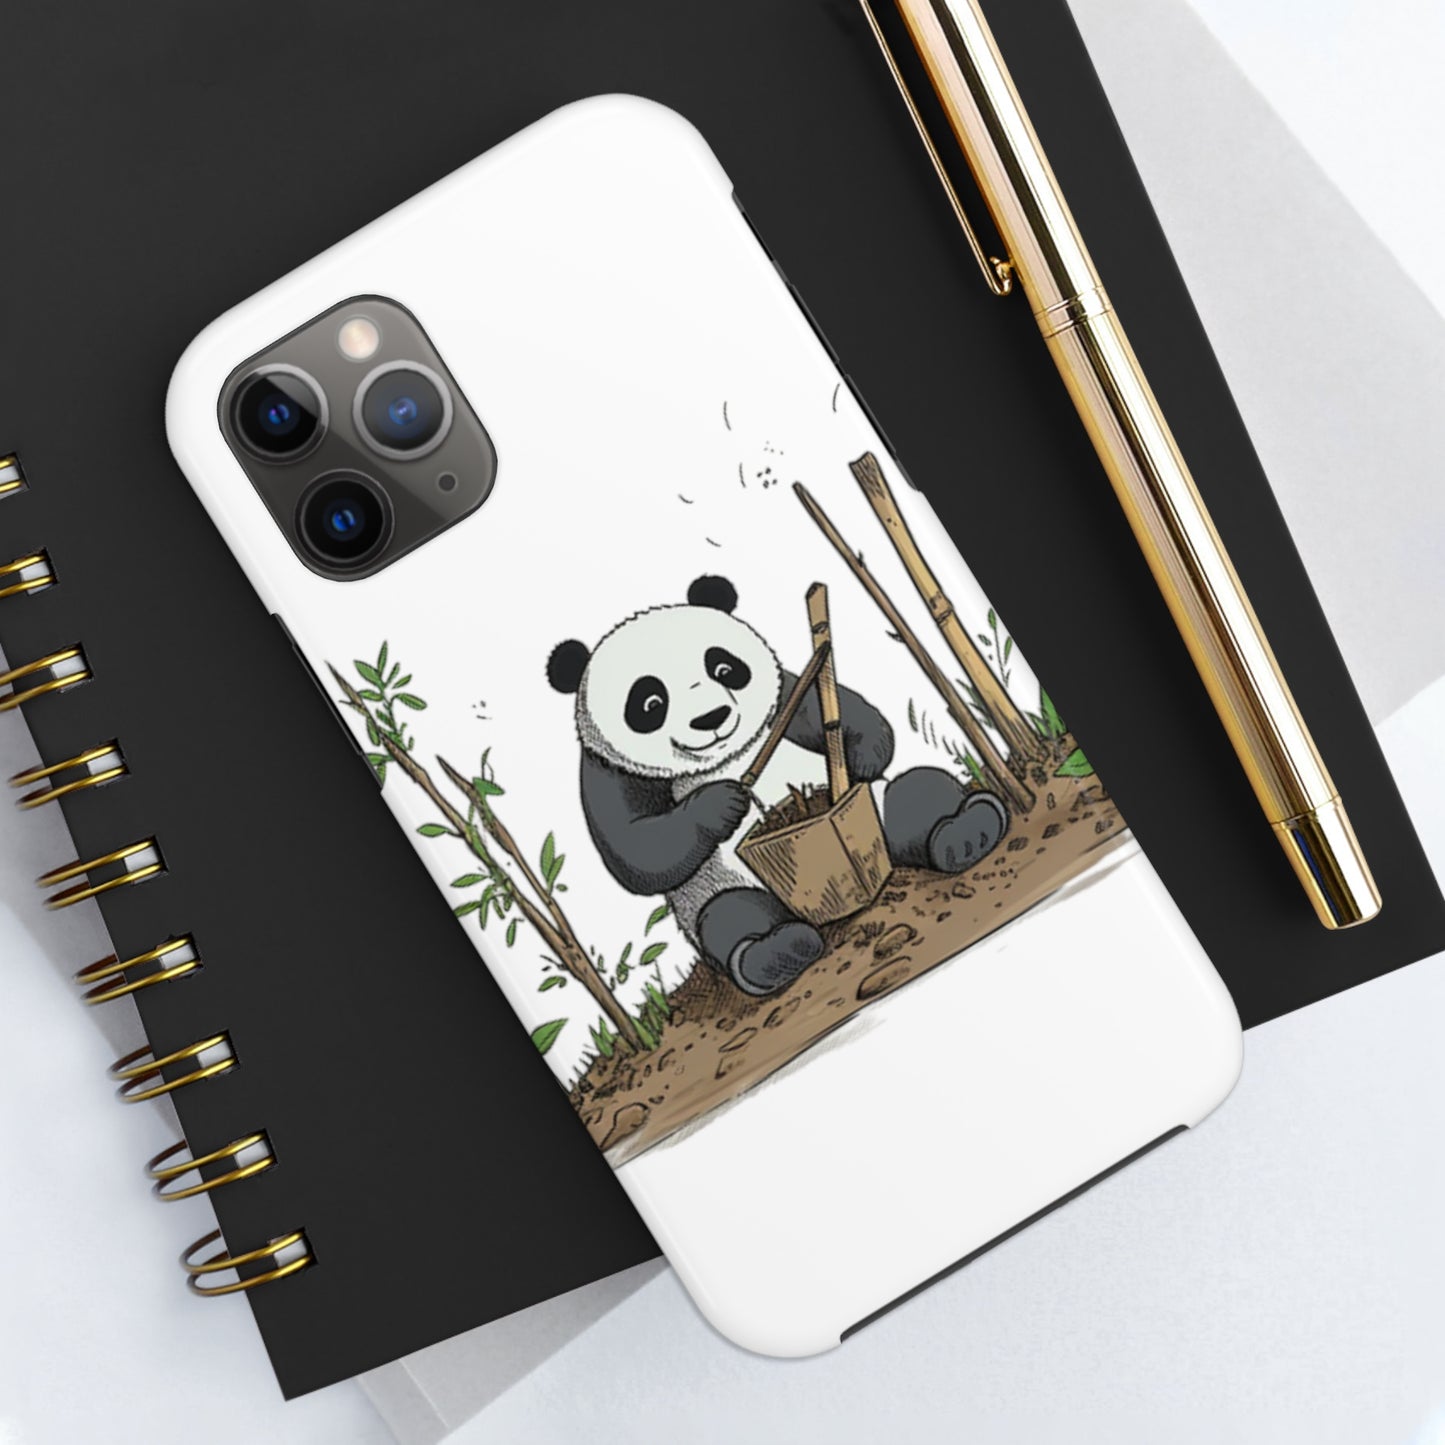 Eco-Panda Tough Phone Cases